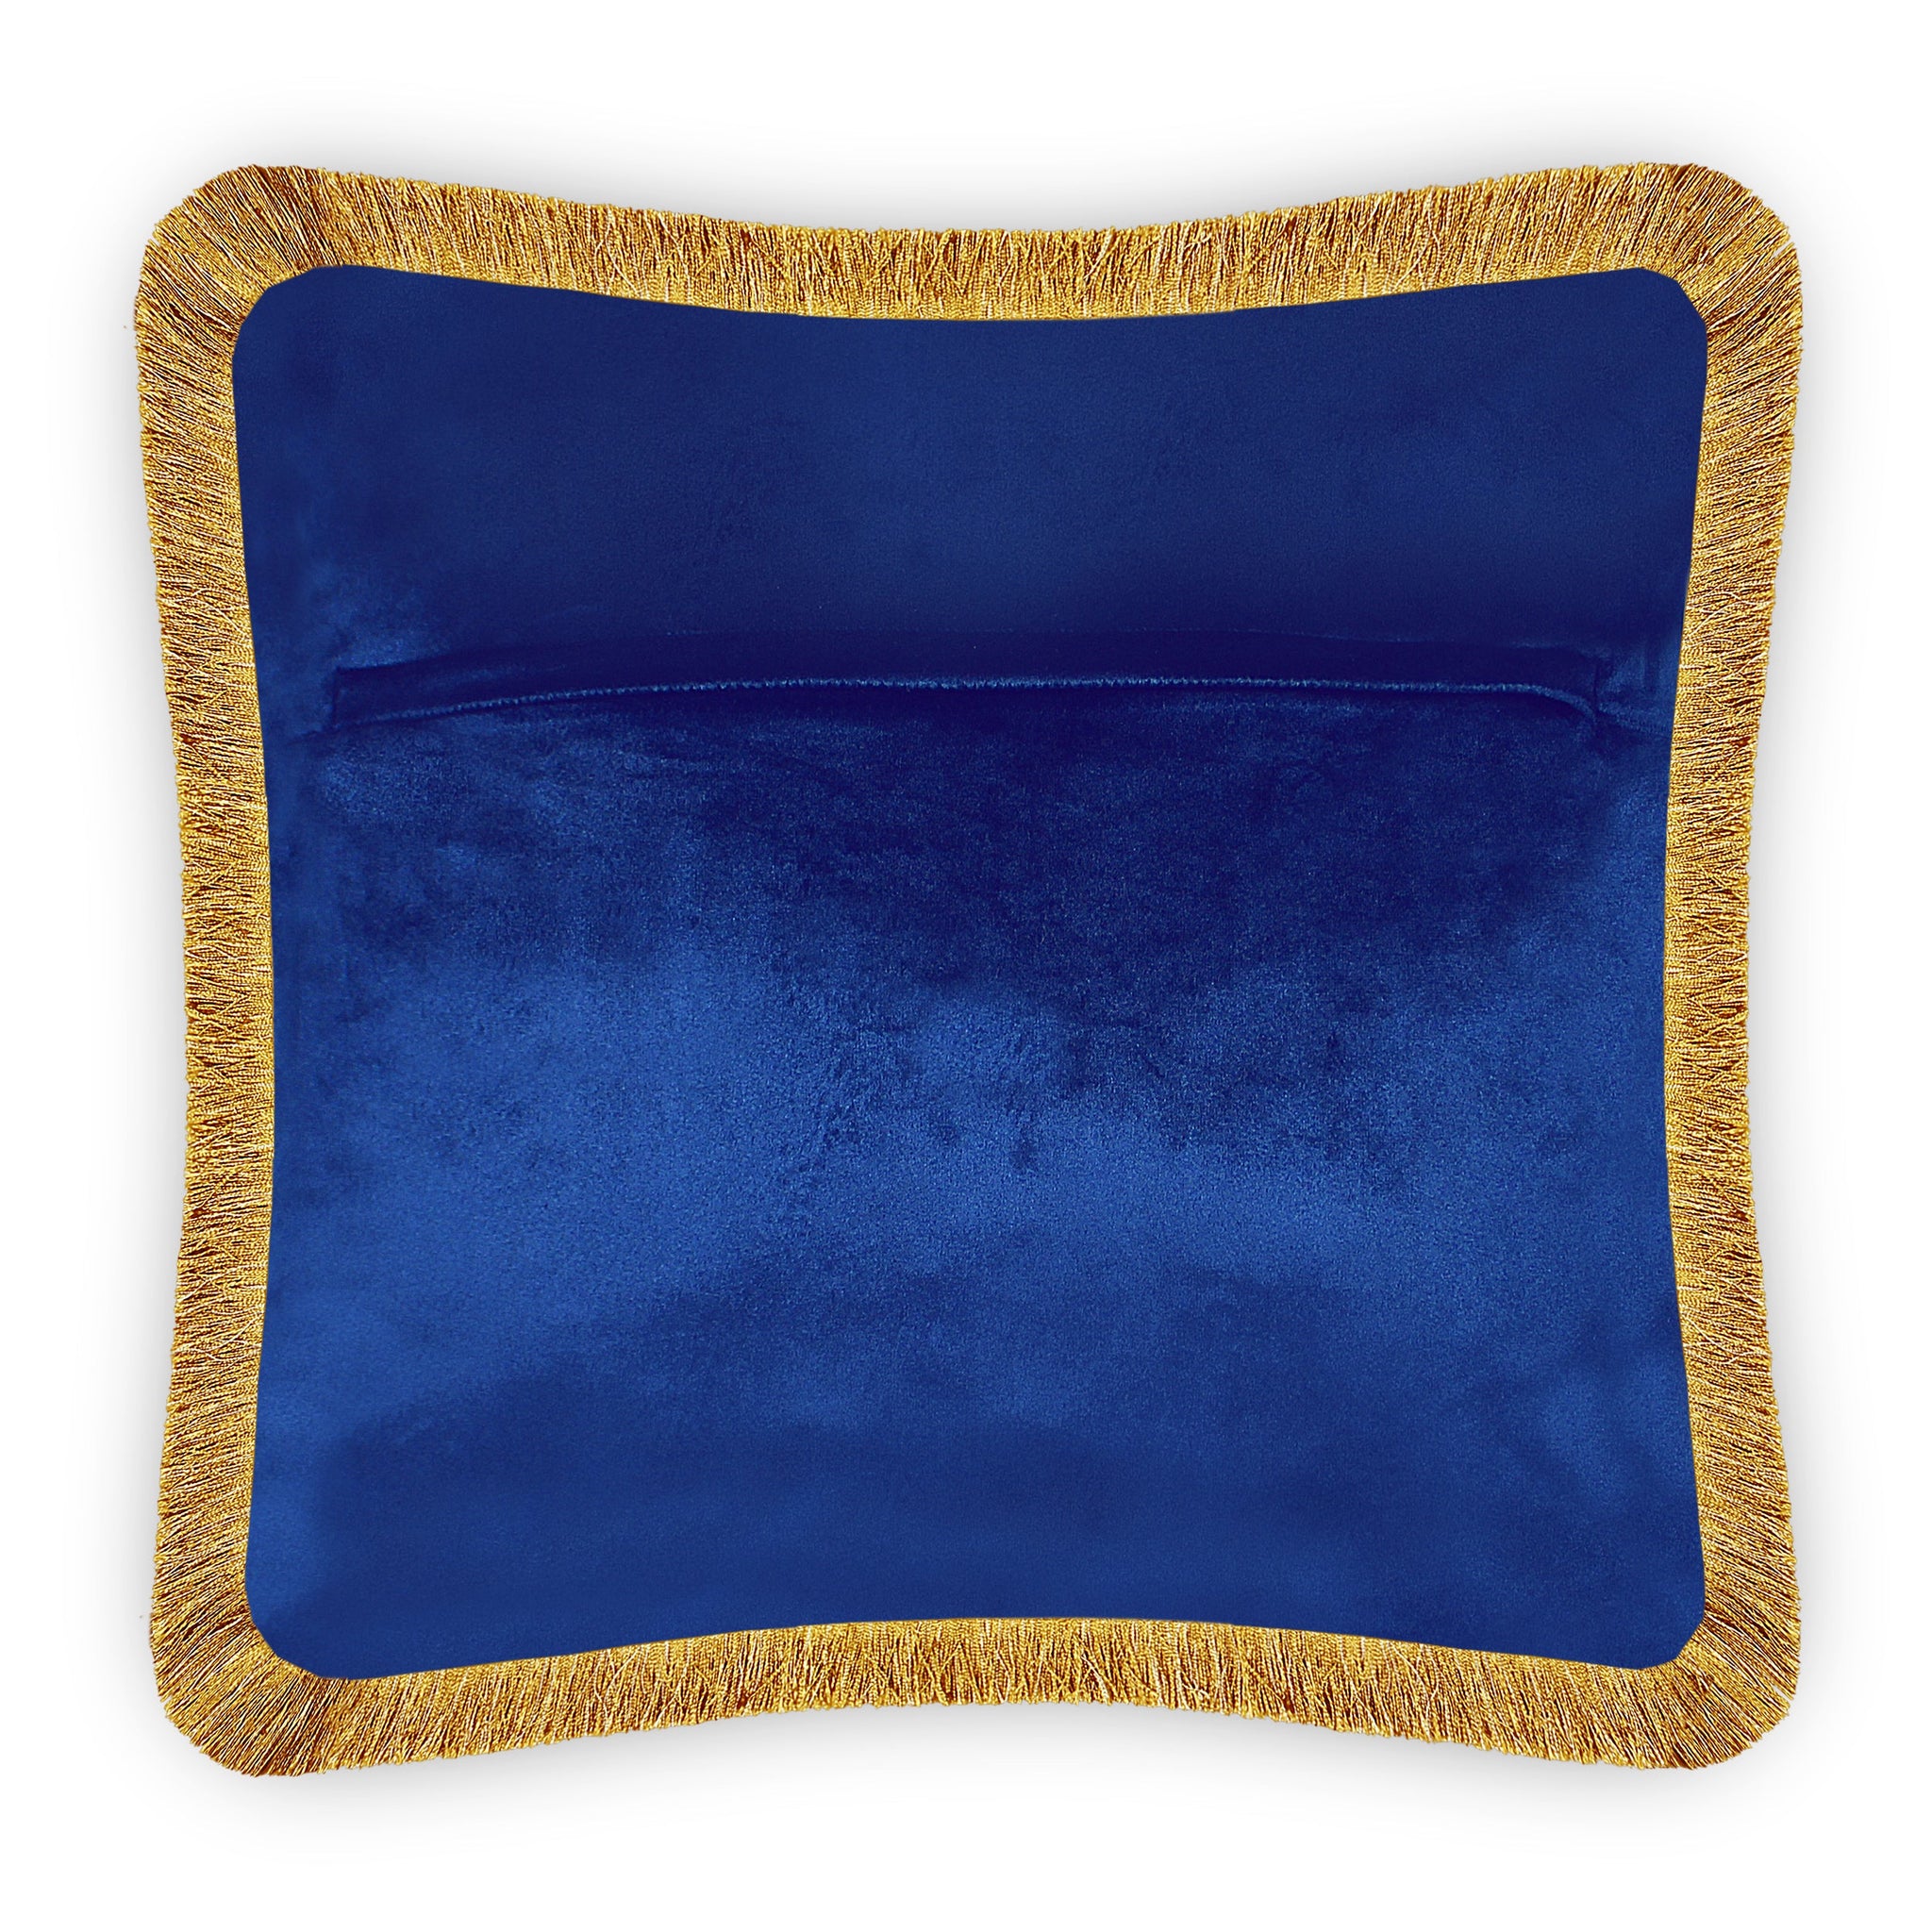 Blue Velvet Cushion Cover Ethnic Aboriginal Geometric Decorative Pillowcase Home Decor Throw Pillow for Sofa Chair Living Room 45x45 cm 18x18 In